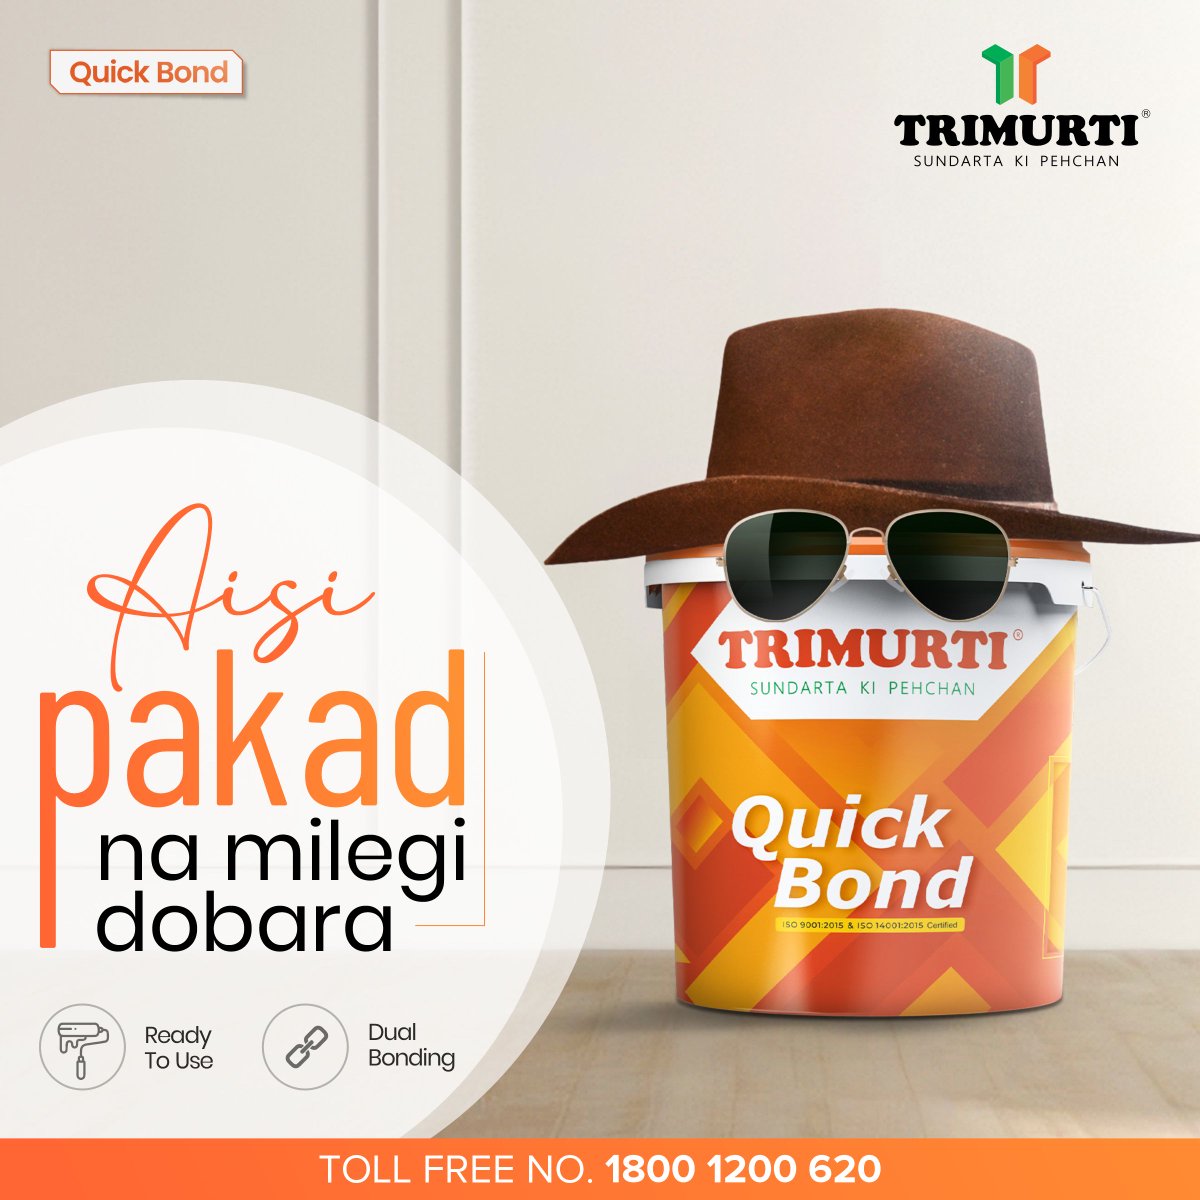 Trimurti Quick Bond, for the strongest pakad of your plasters.
.
.
.
#Trimurti #TrimurtiWallcareProducts #TrimurtiQuickBond #BestGrip #BeautifulWalls